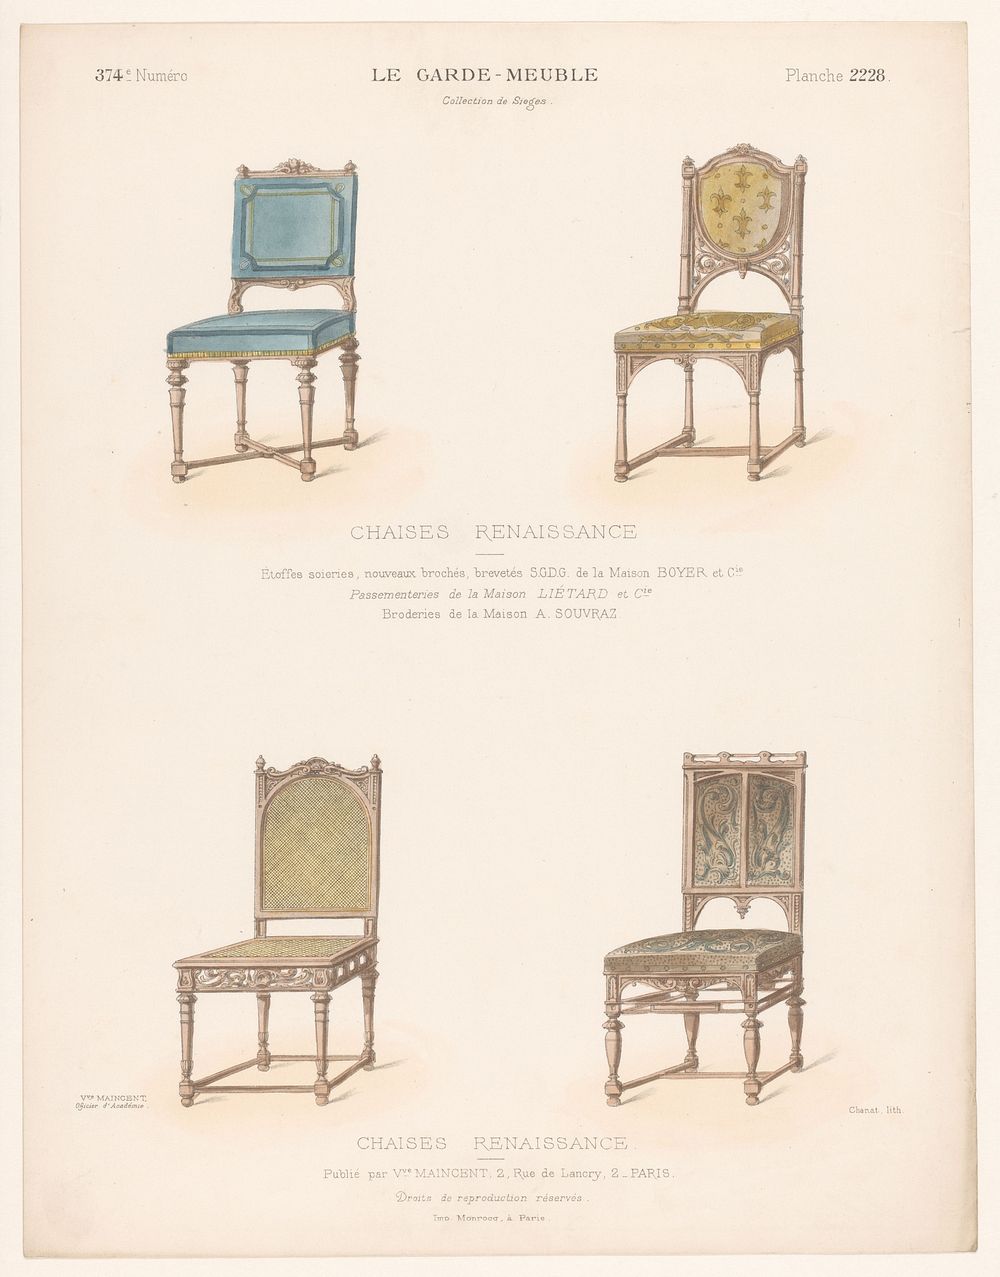 Vier stoelen (1895 - 1935) by Chanat, Monrocq and weduwe Eugène Maincent